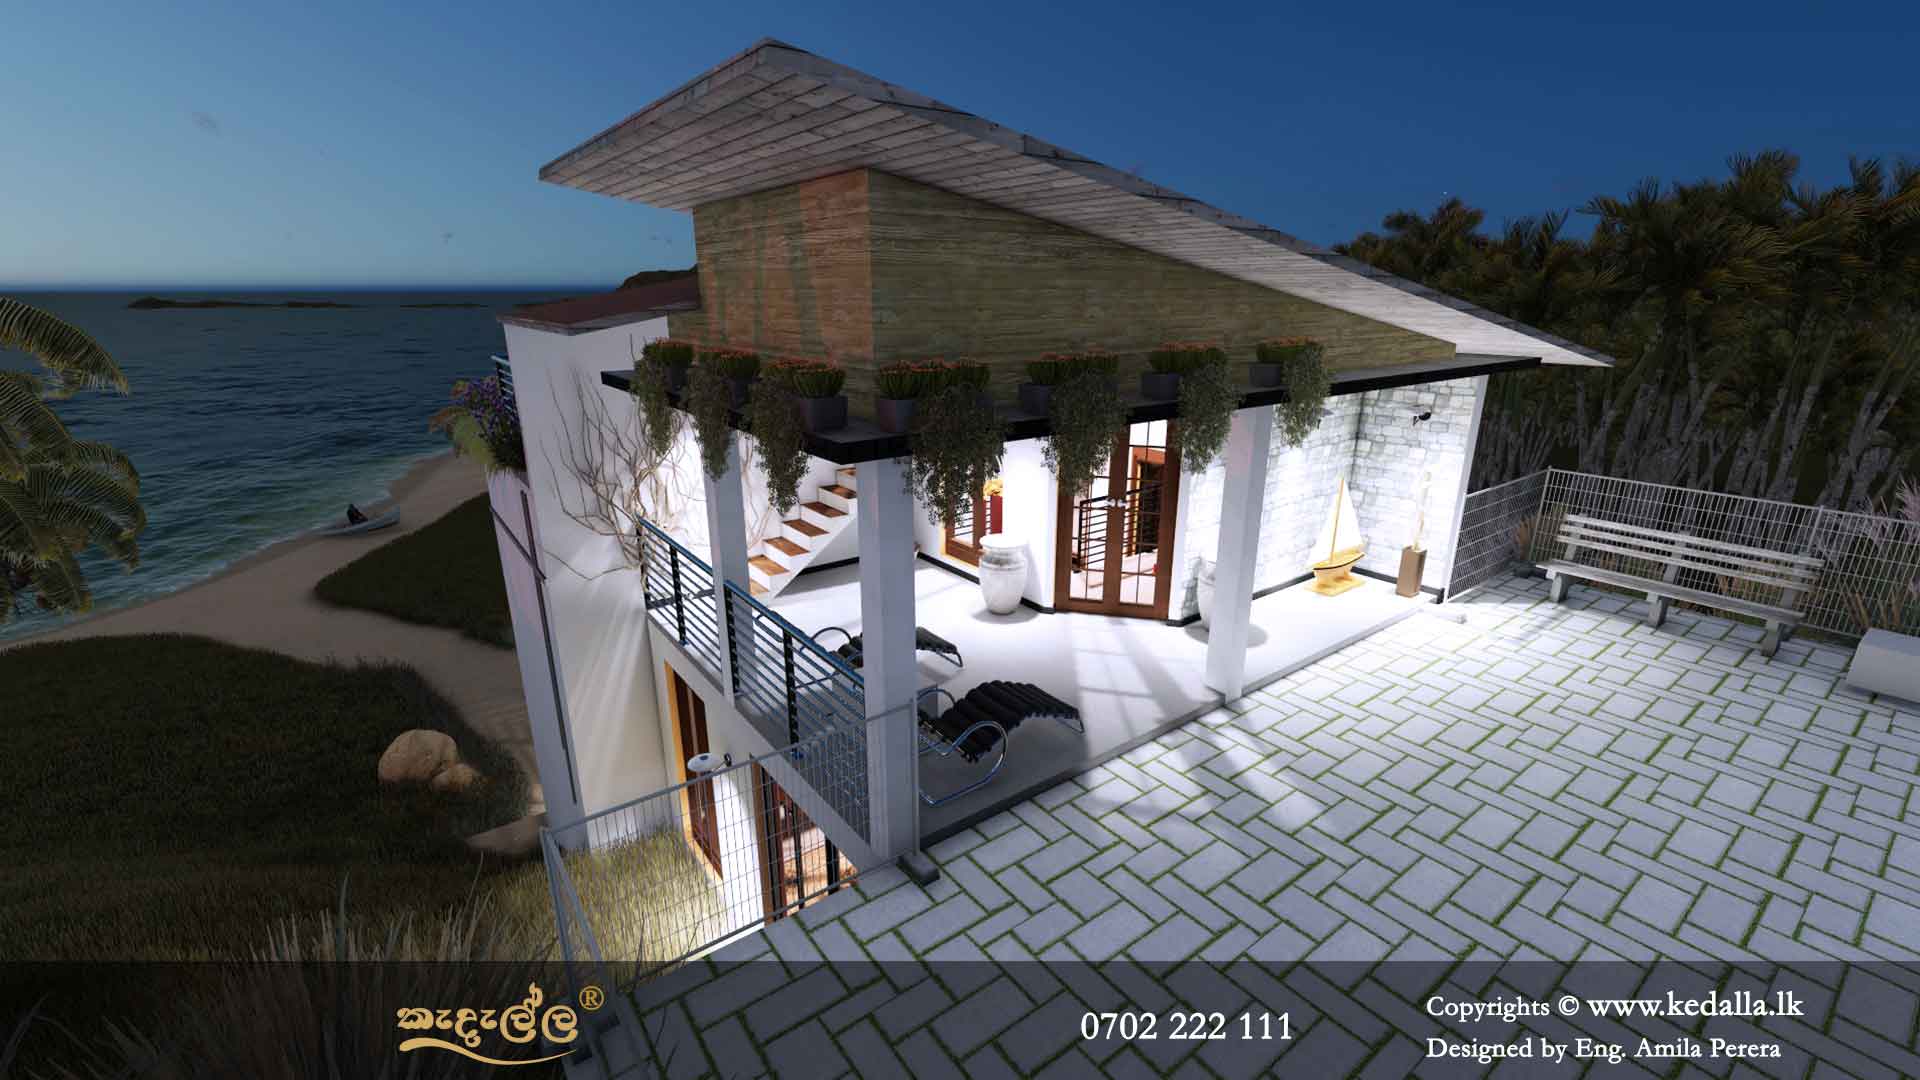 3 Bedroom House Plans in Sri Lanka|Home Designs|Kedella